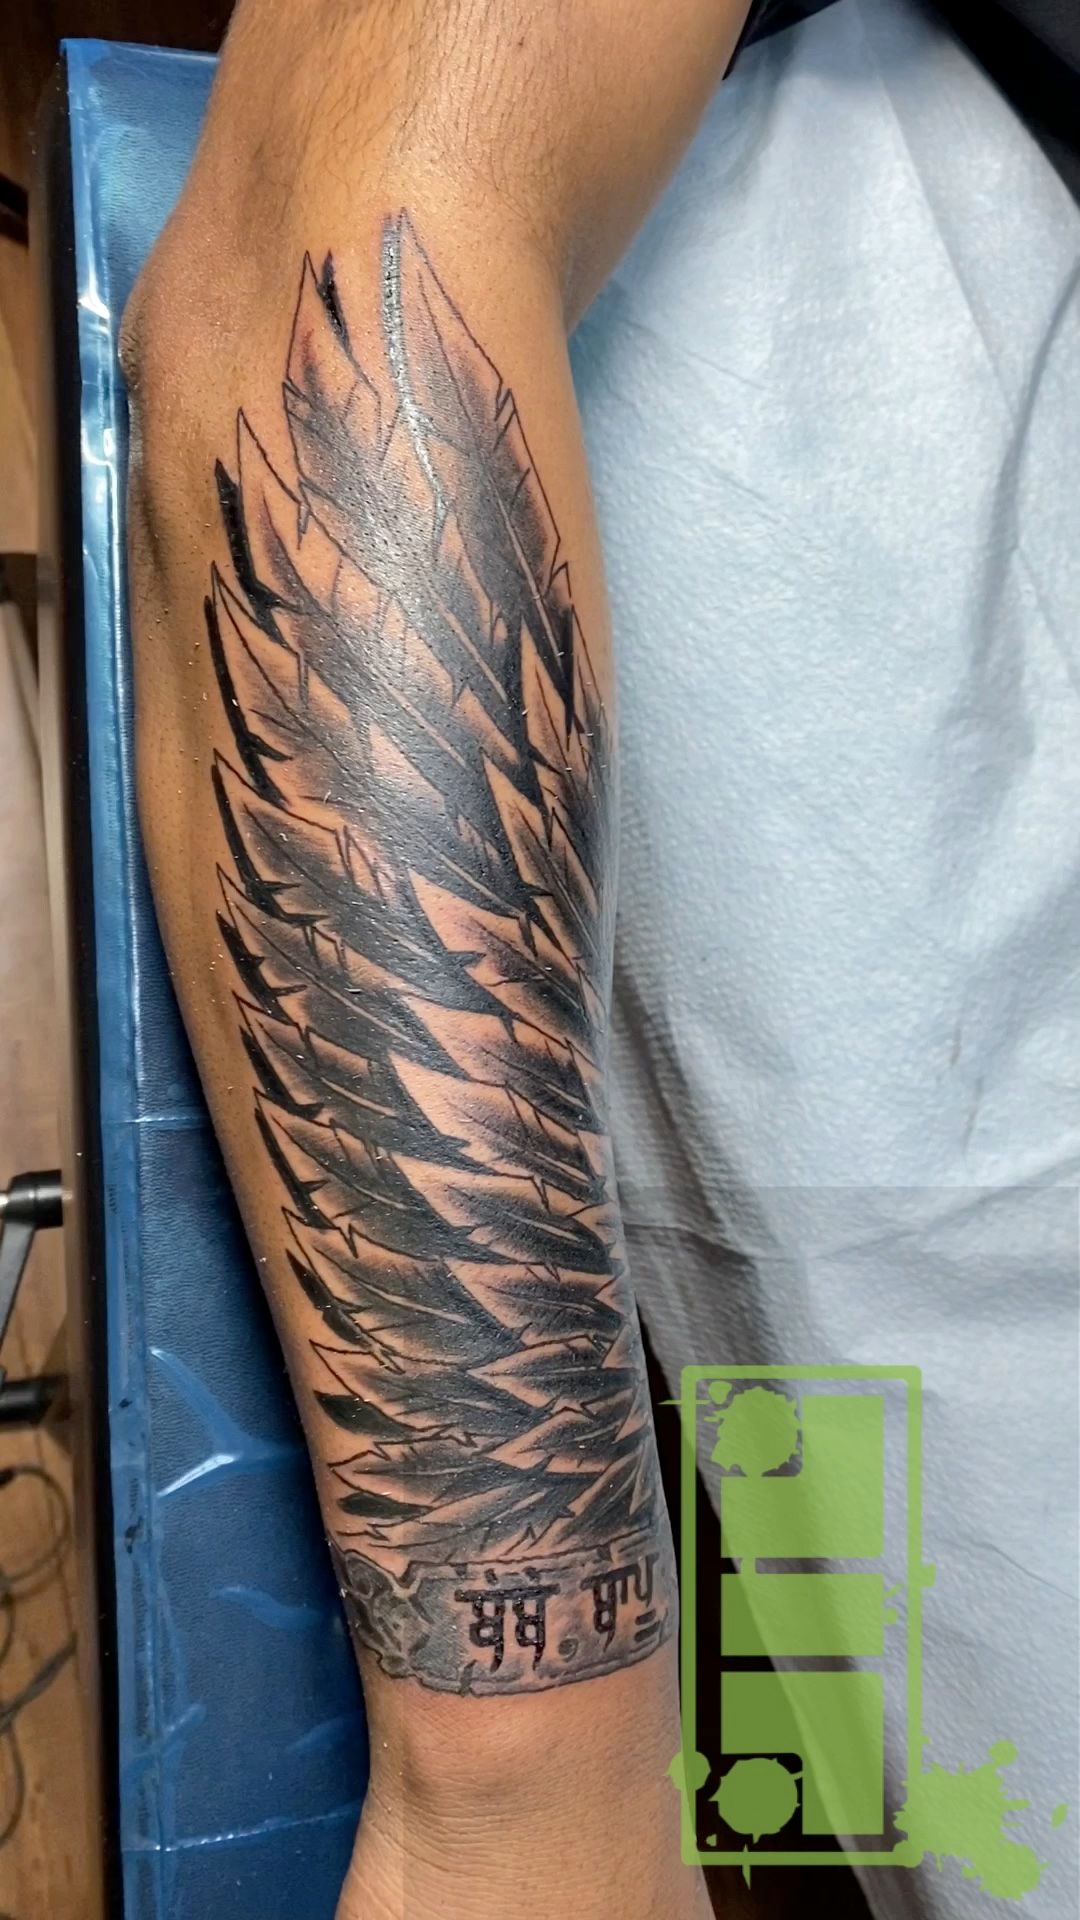 Aces High Tattoo Studio  Feather arrow forearm tattoo  feathers  greyshadetattoo pennyblacktattoobutter arrowtattoo 60 per hour 250 for  5 hours  Facebook